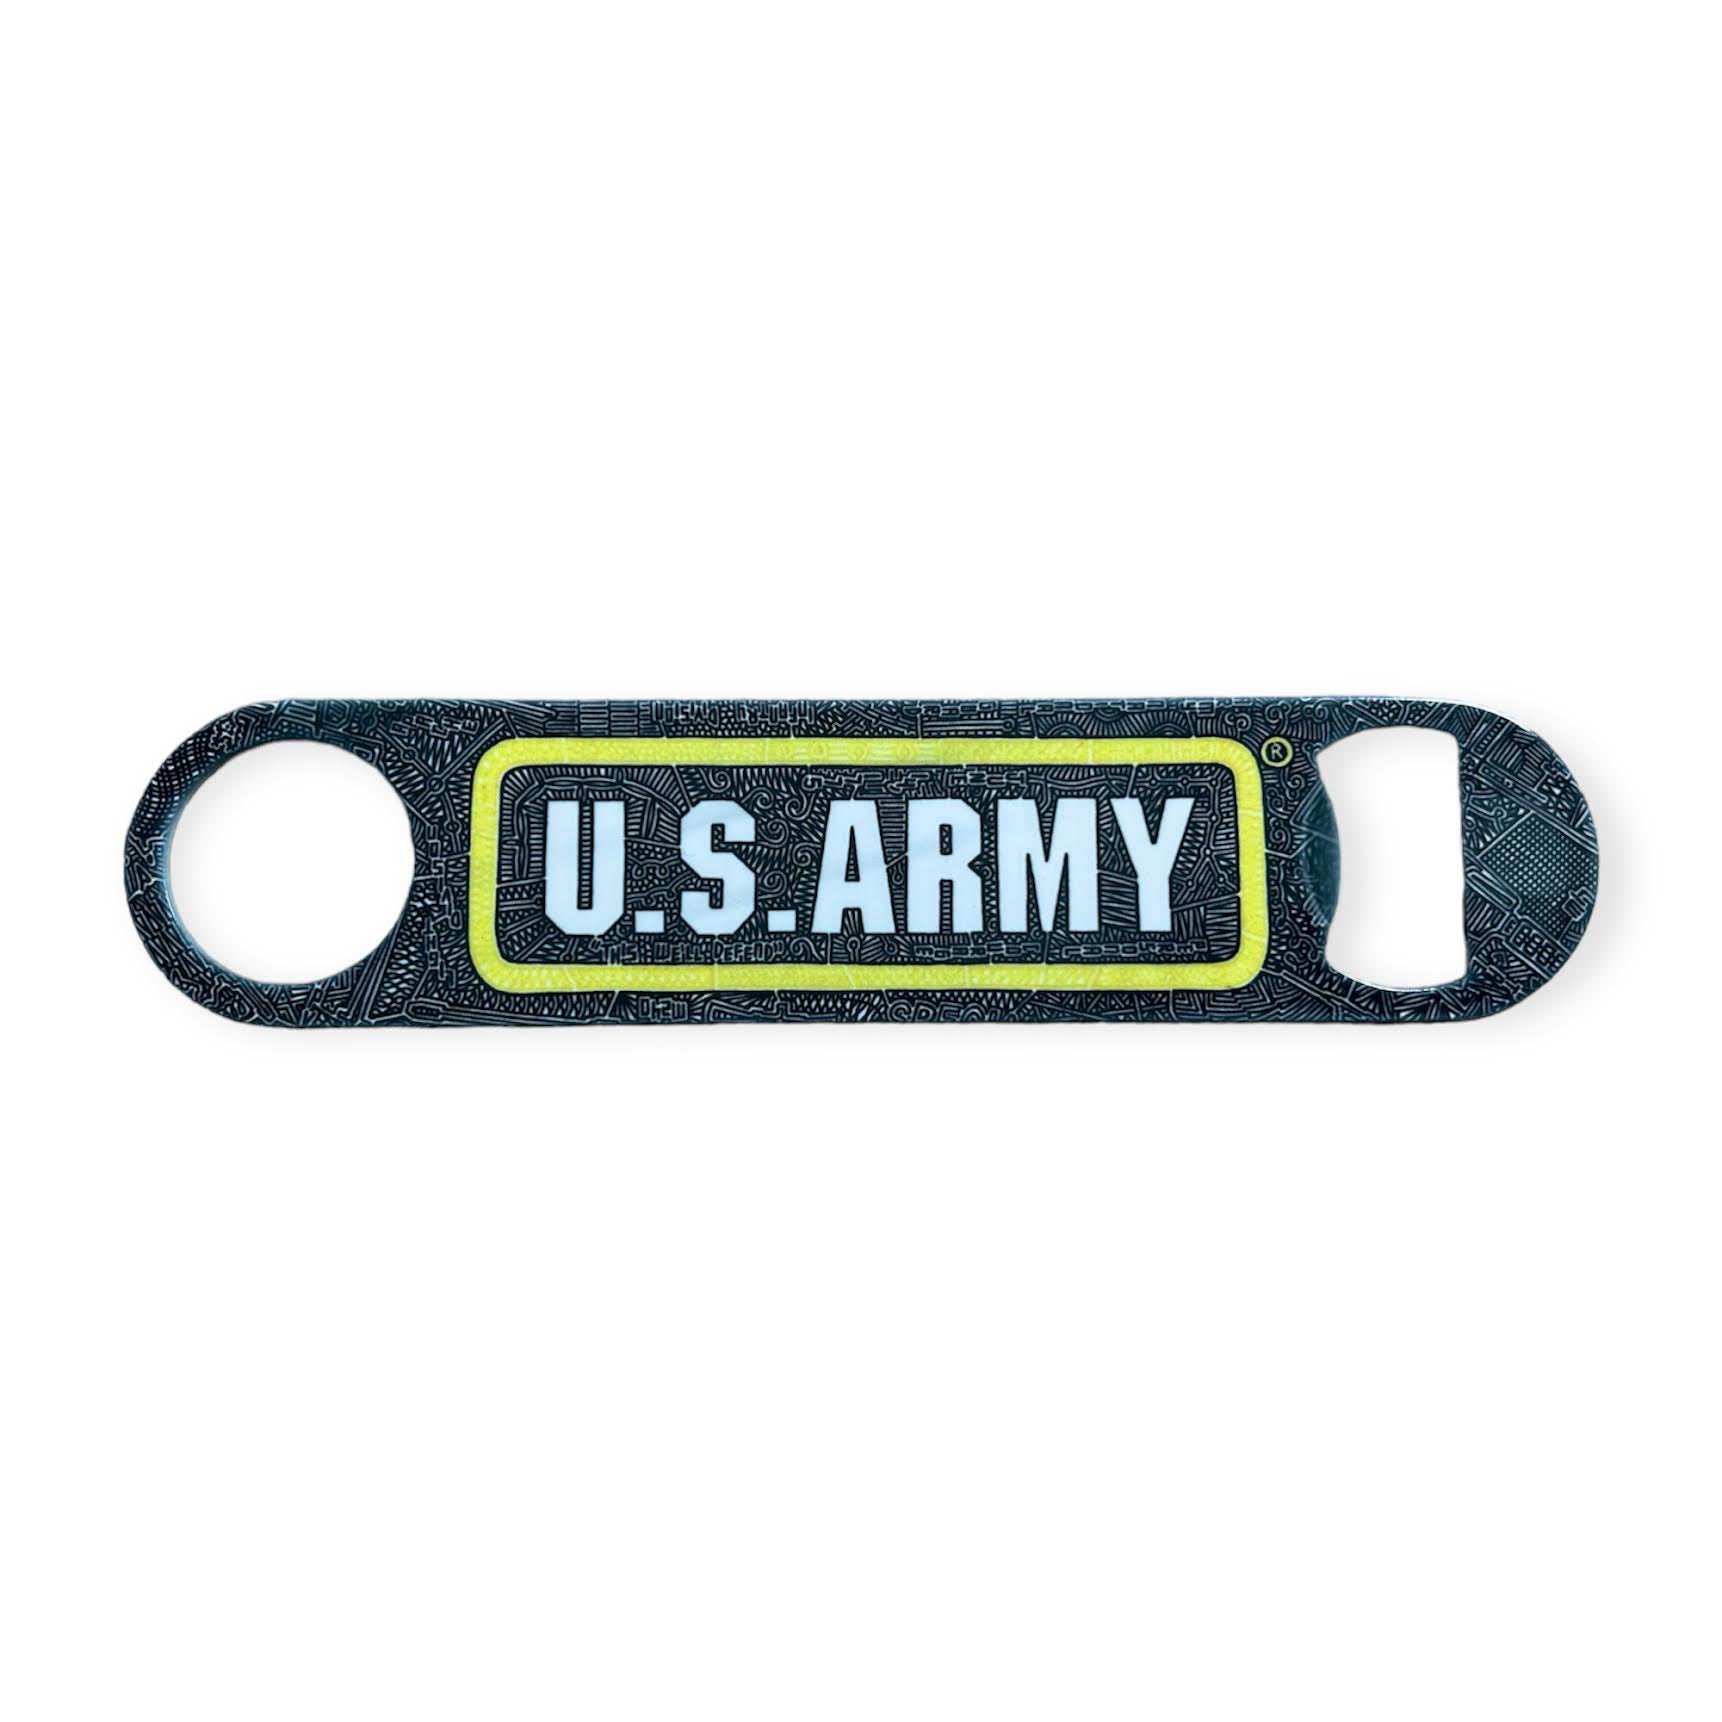 Bottle Opener - U.S. ARMY